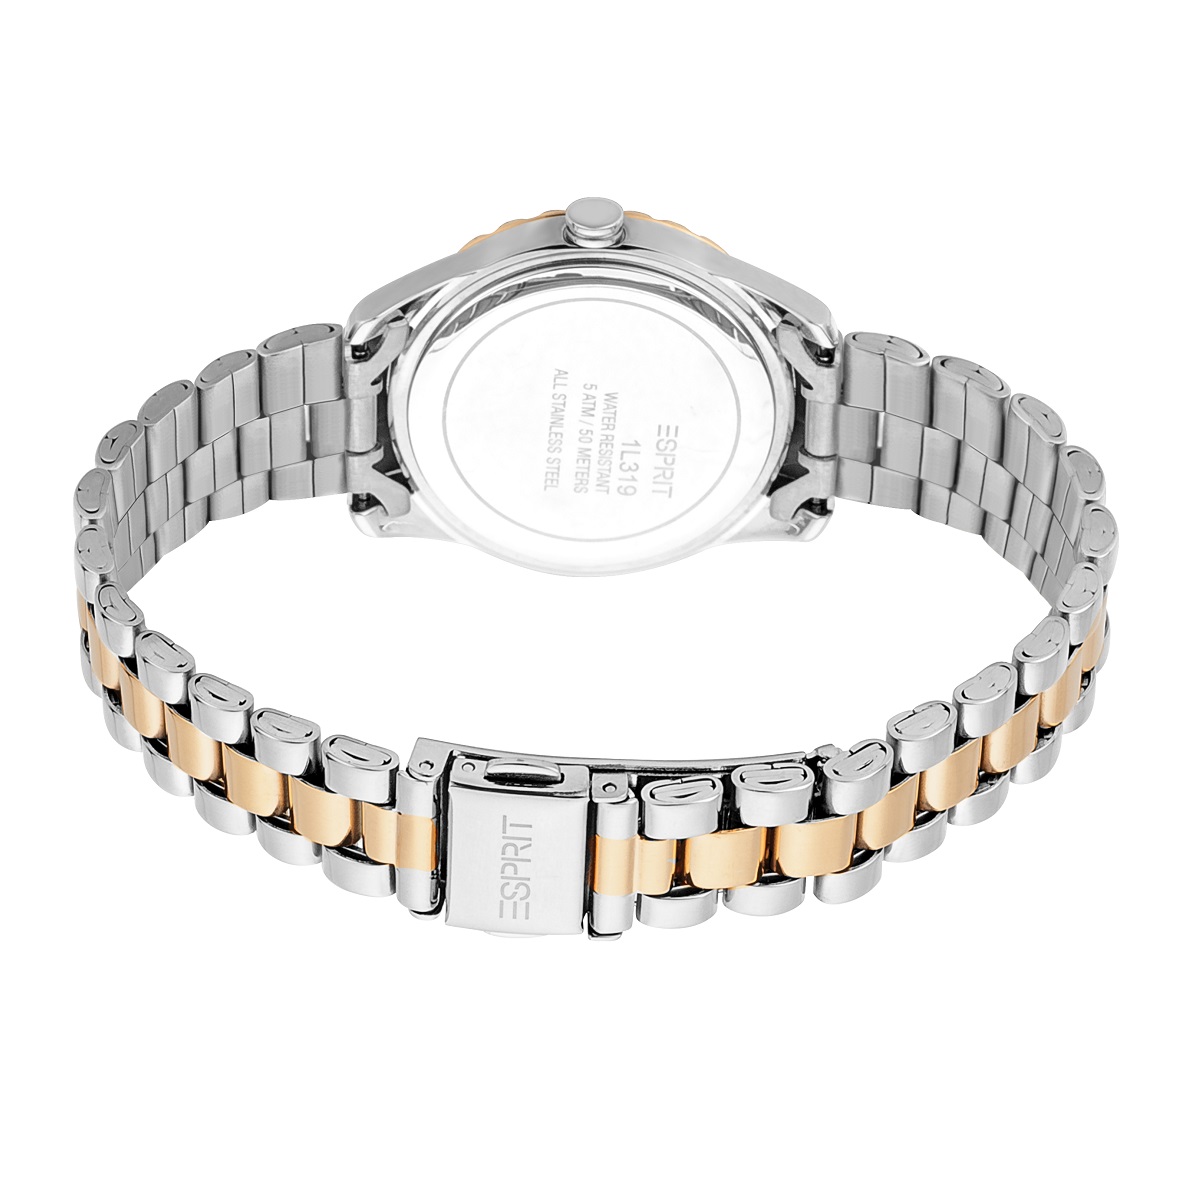 Đồng hồ đeo tay nữ hiệu Esprit ES1L319M0075